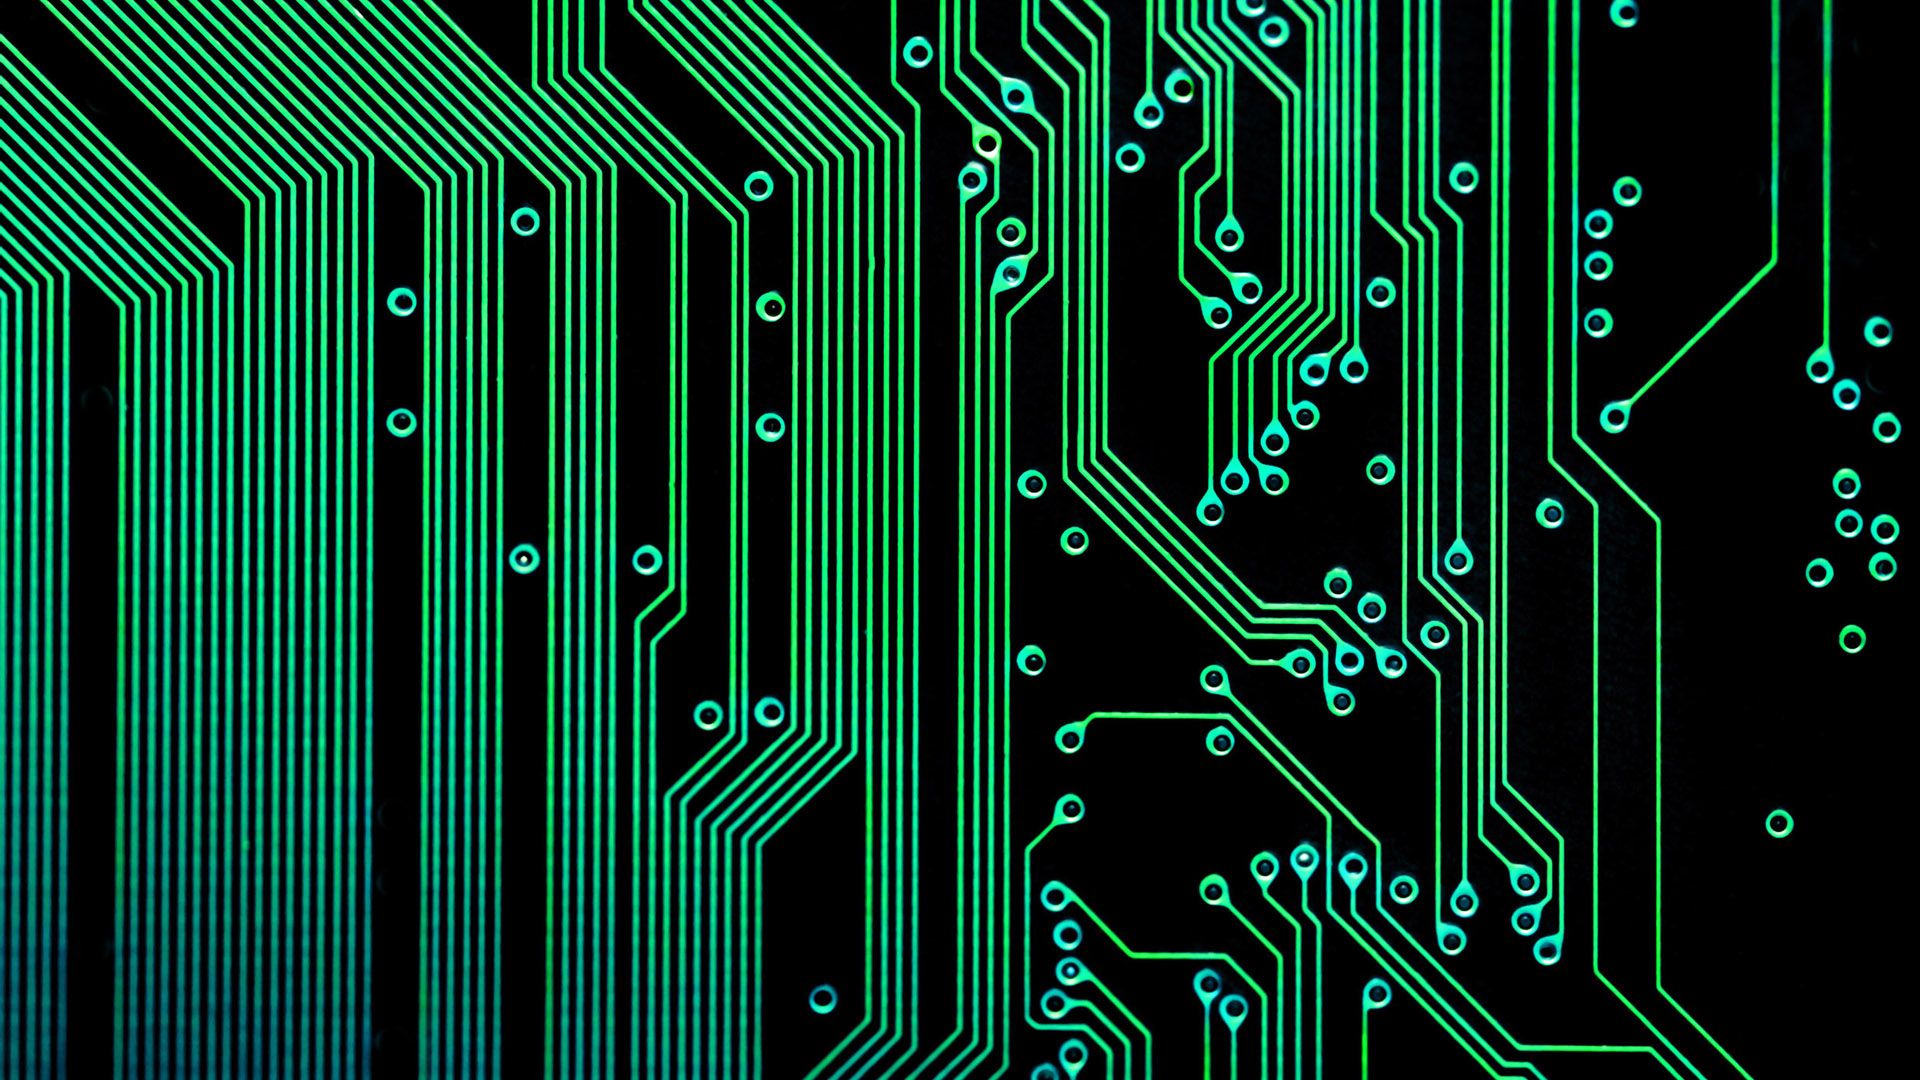 Electronic Circuit wallpaper | PC | Pinterest